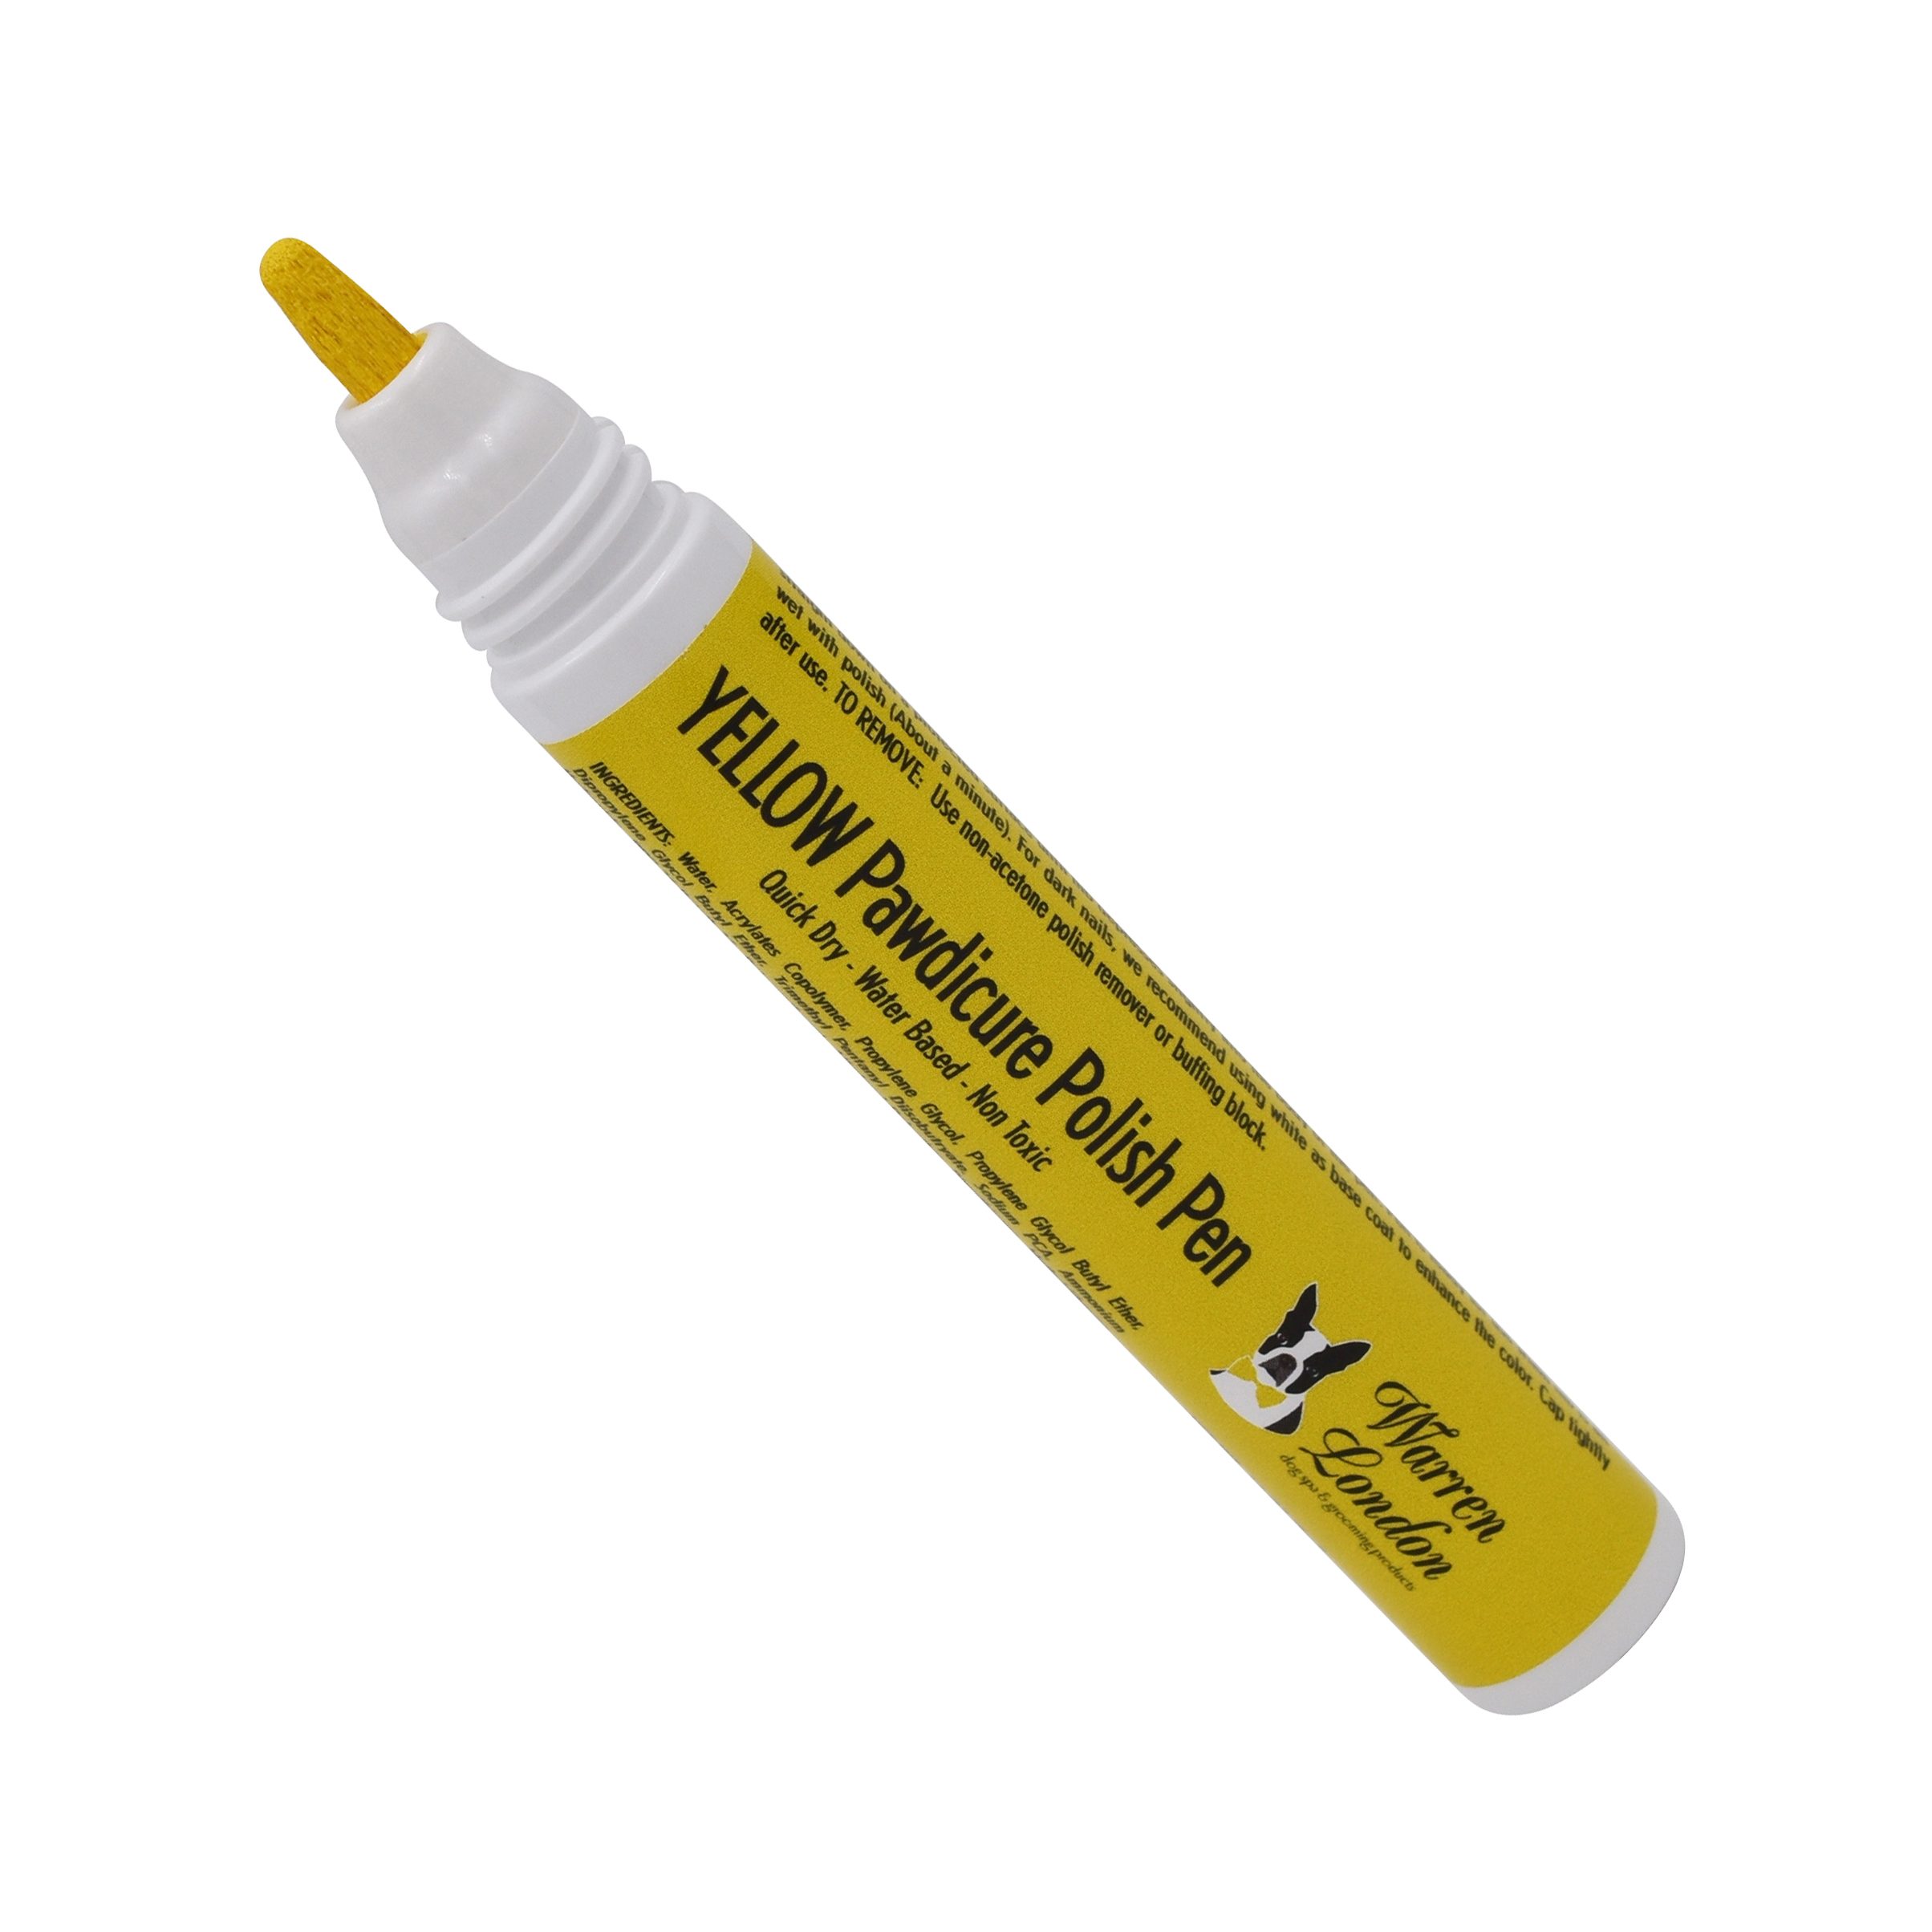 101610 0.16 Oz Pawdicure Dog Nail Polish Pen, Yellow